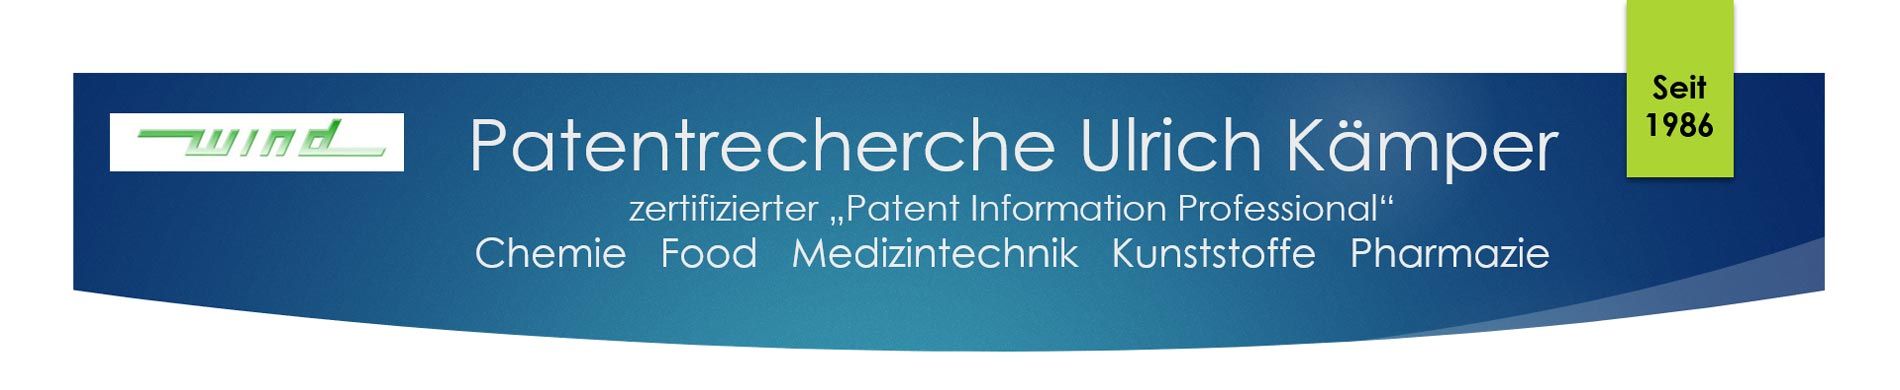 Patentrecherche Ulrich Kämper